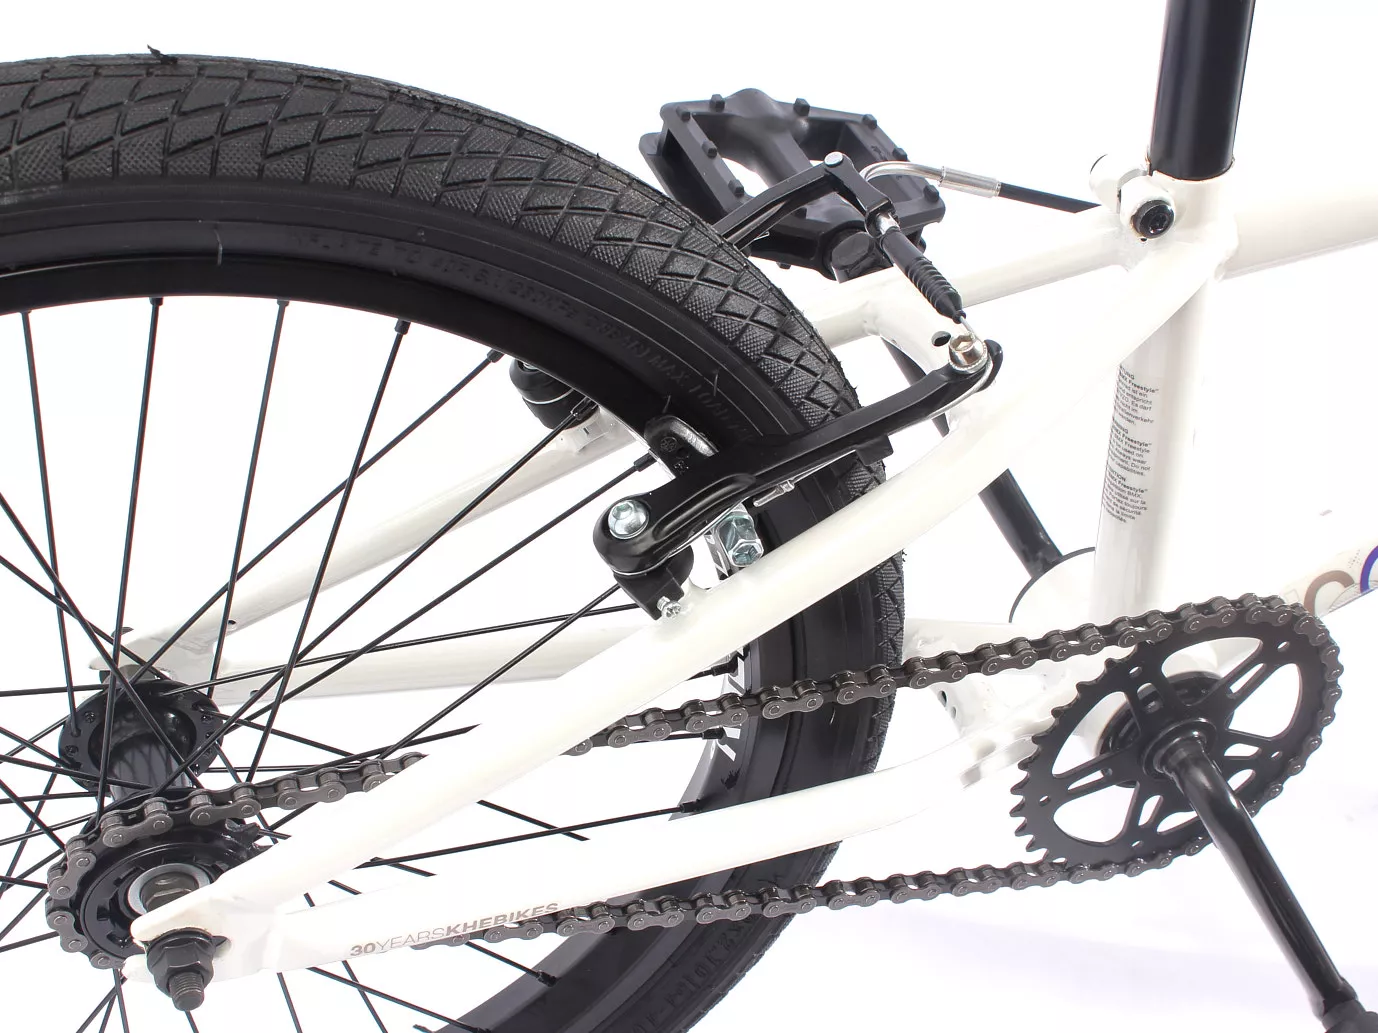 Bicicleta BMX KHE COSMIC 20 pulgadas 11,1kg blanco